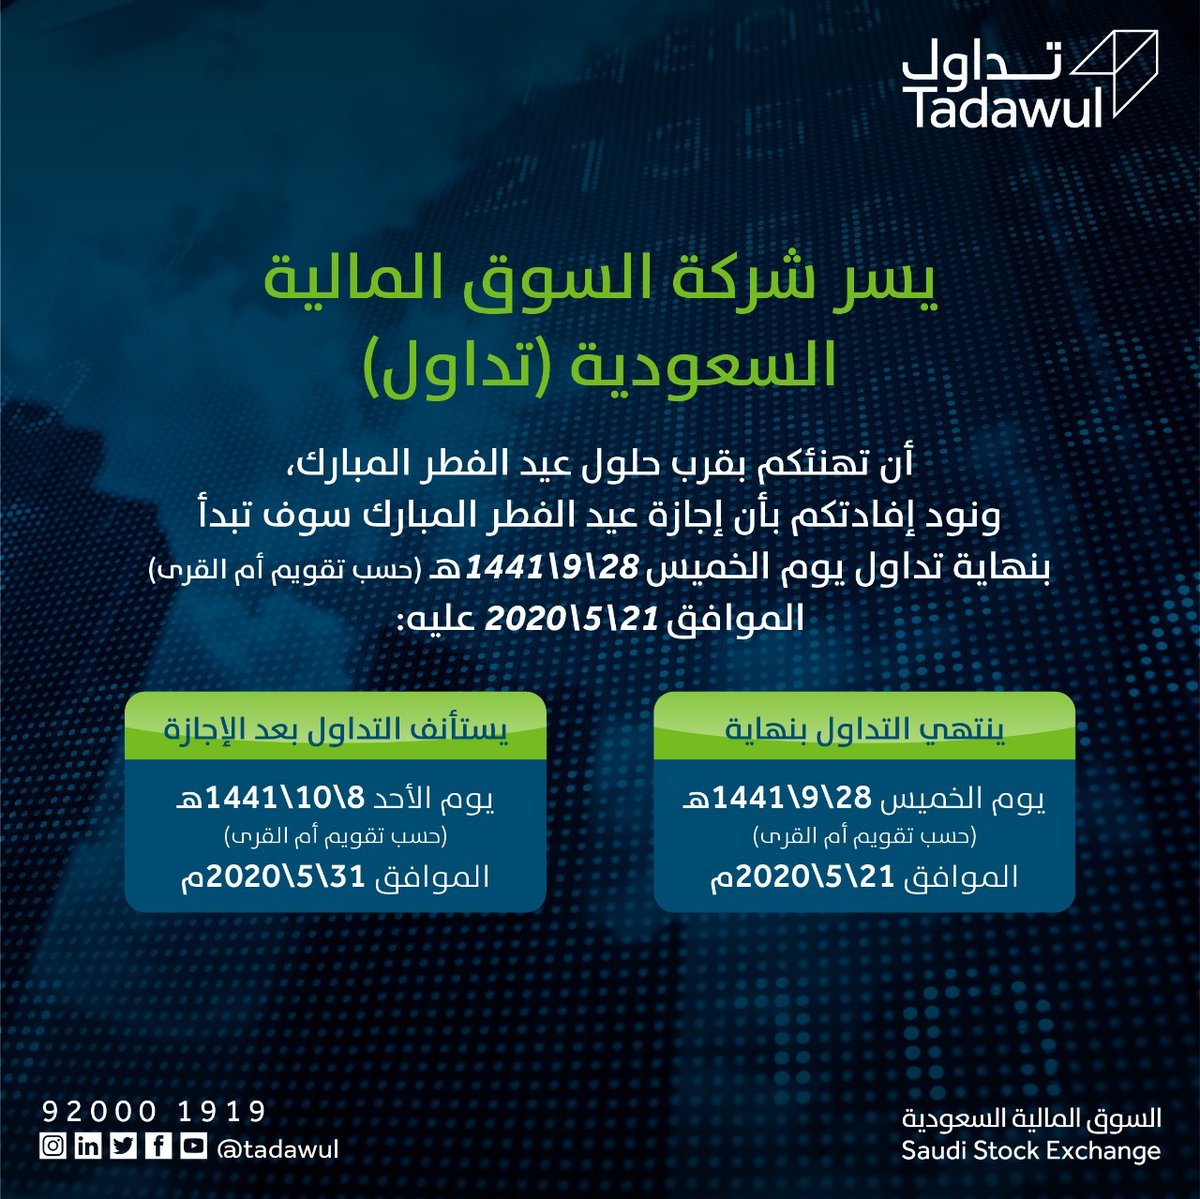 Saudi Exchange | تداول السعودية on Twitter: "نهنئكم بقرب حلول  #عيد_الفطر_المبارك ونود إفادتكم بمواعيد إجازة السوق المالية السعودية #تداول  https://t.co/gtCMFwl4SE https://t.co/FlISF7Qew2" / Twitter